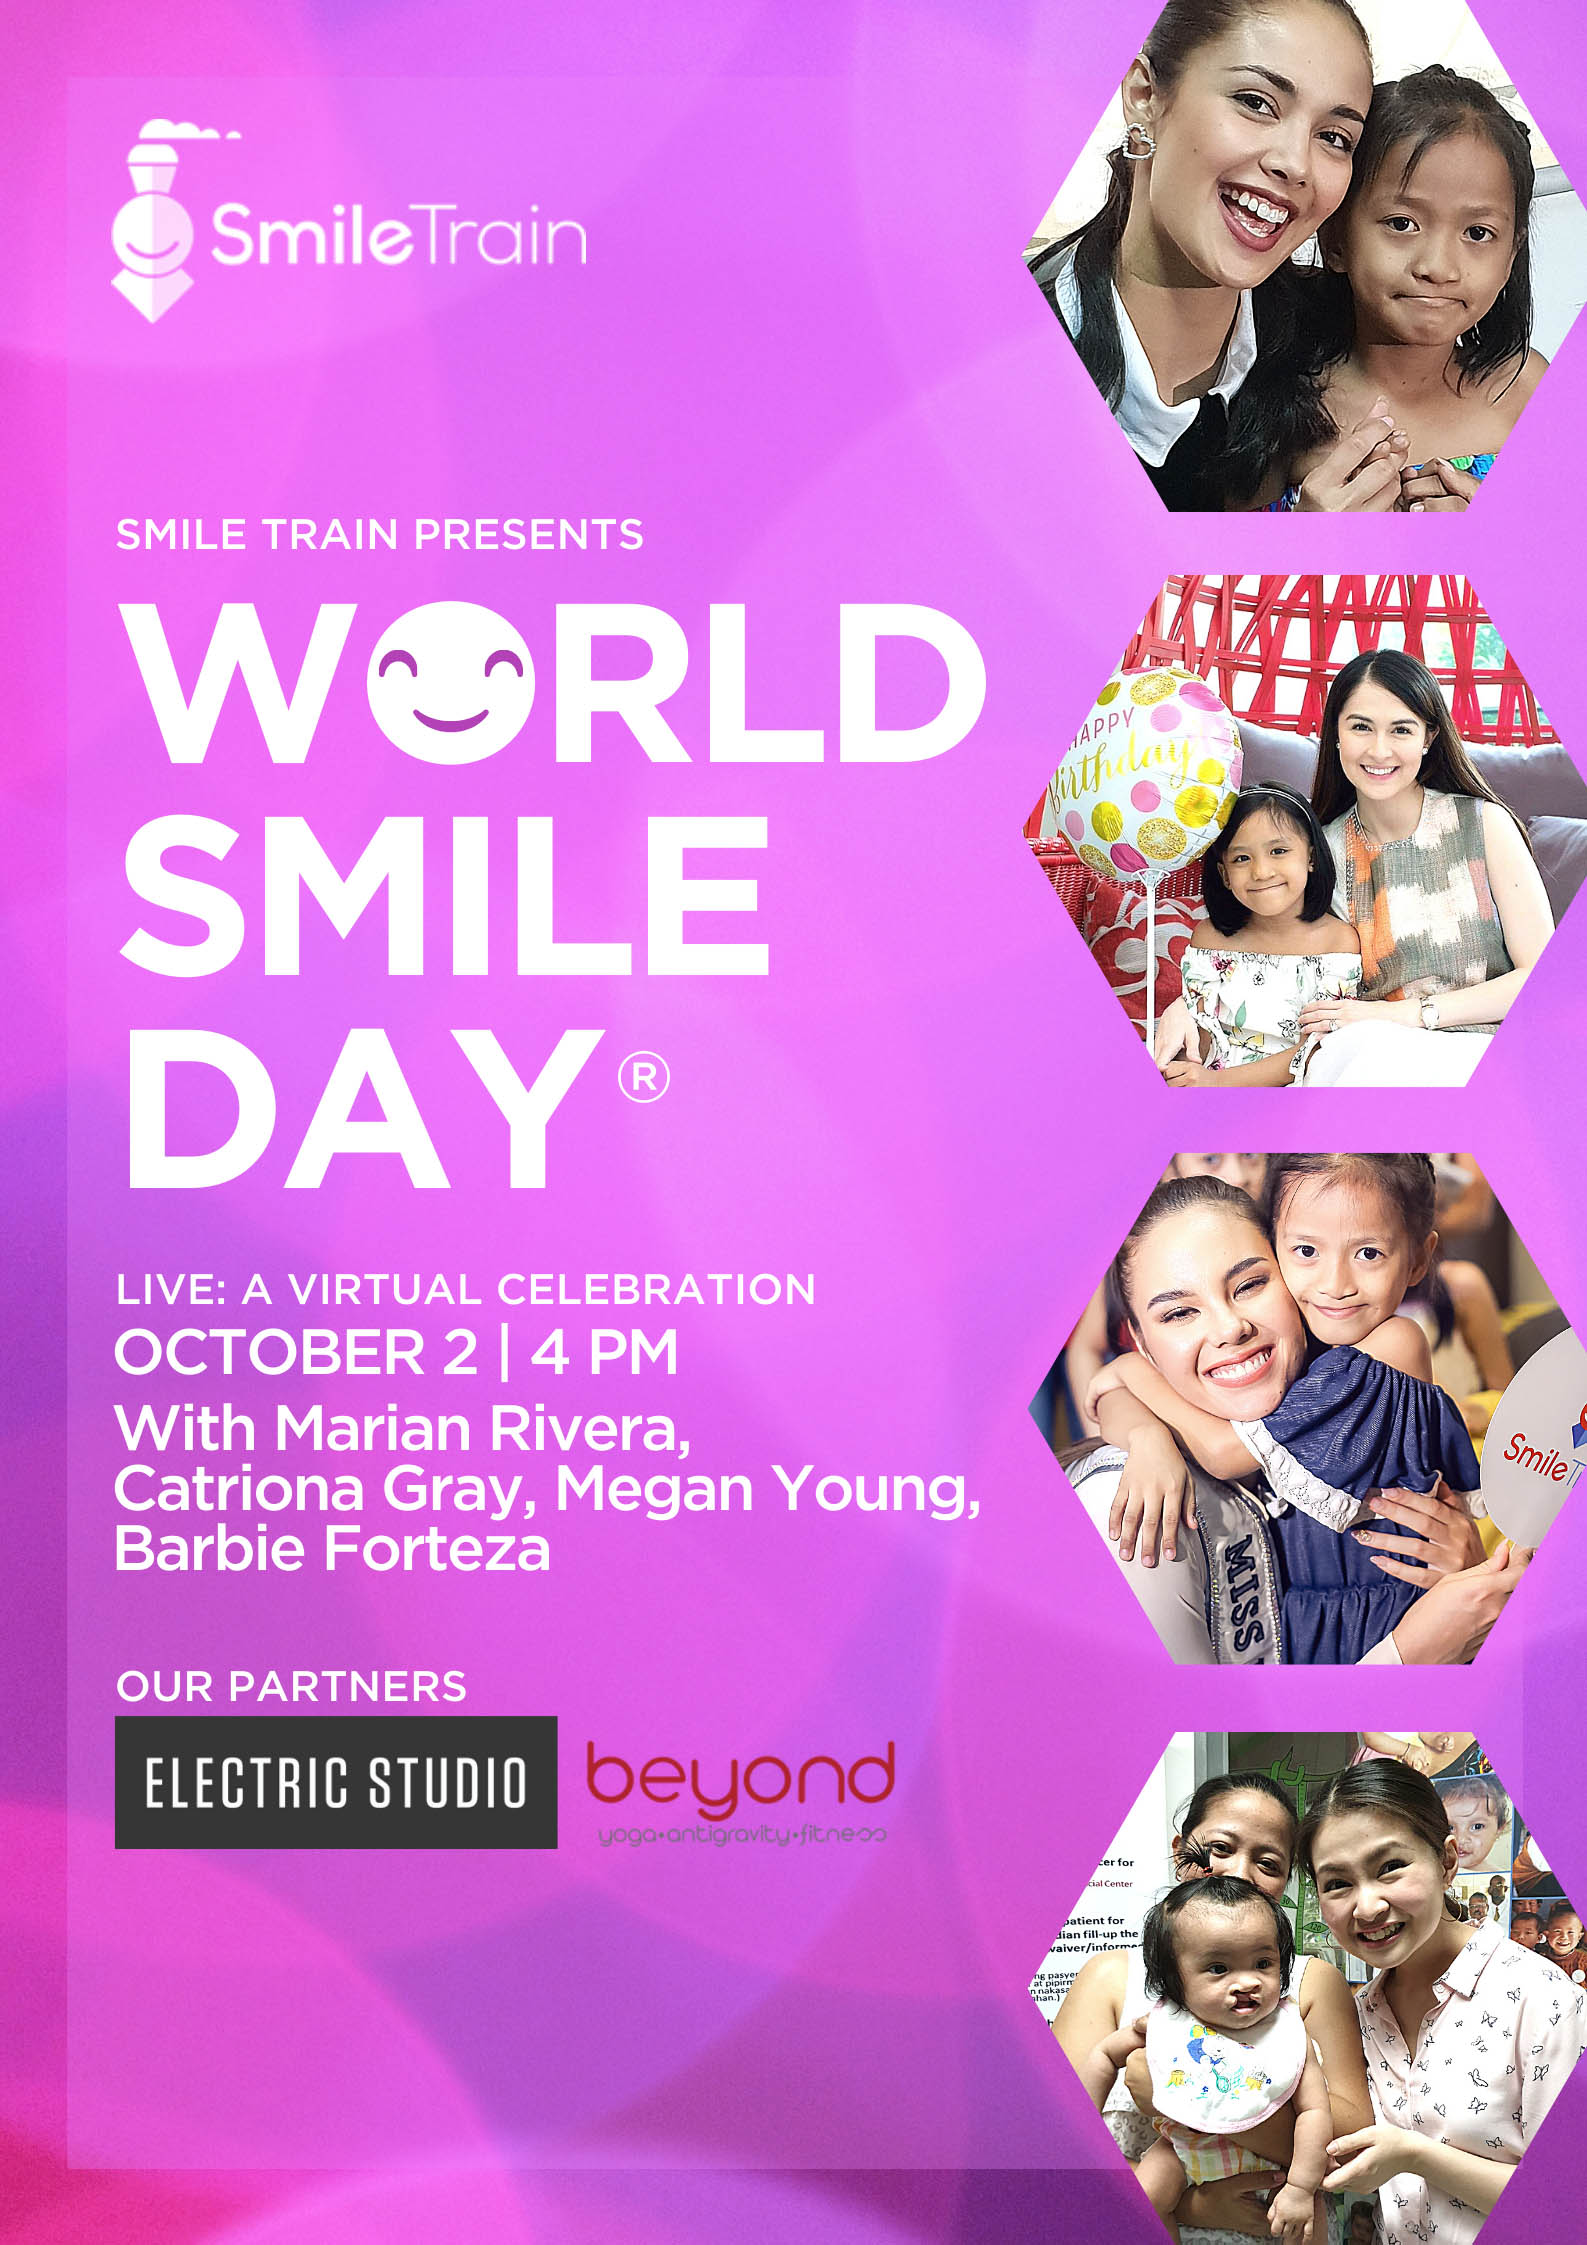 Smile Train Philippines celebrates World Smile Day on October 2